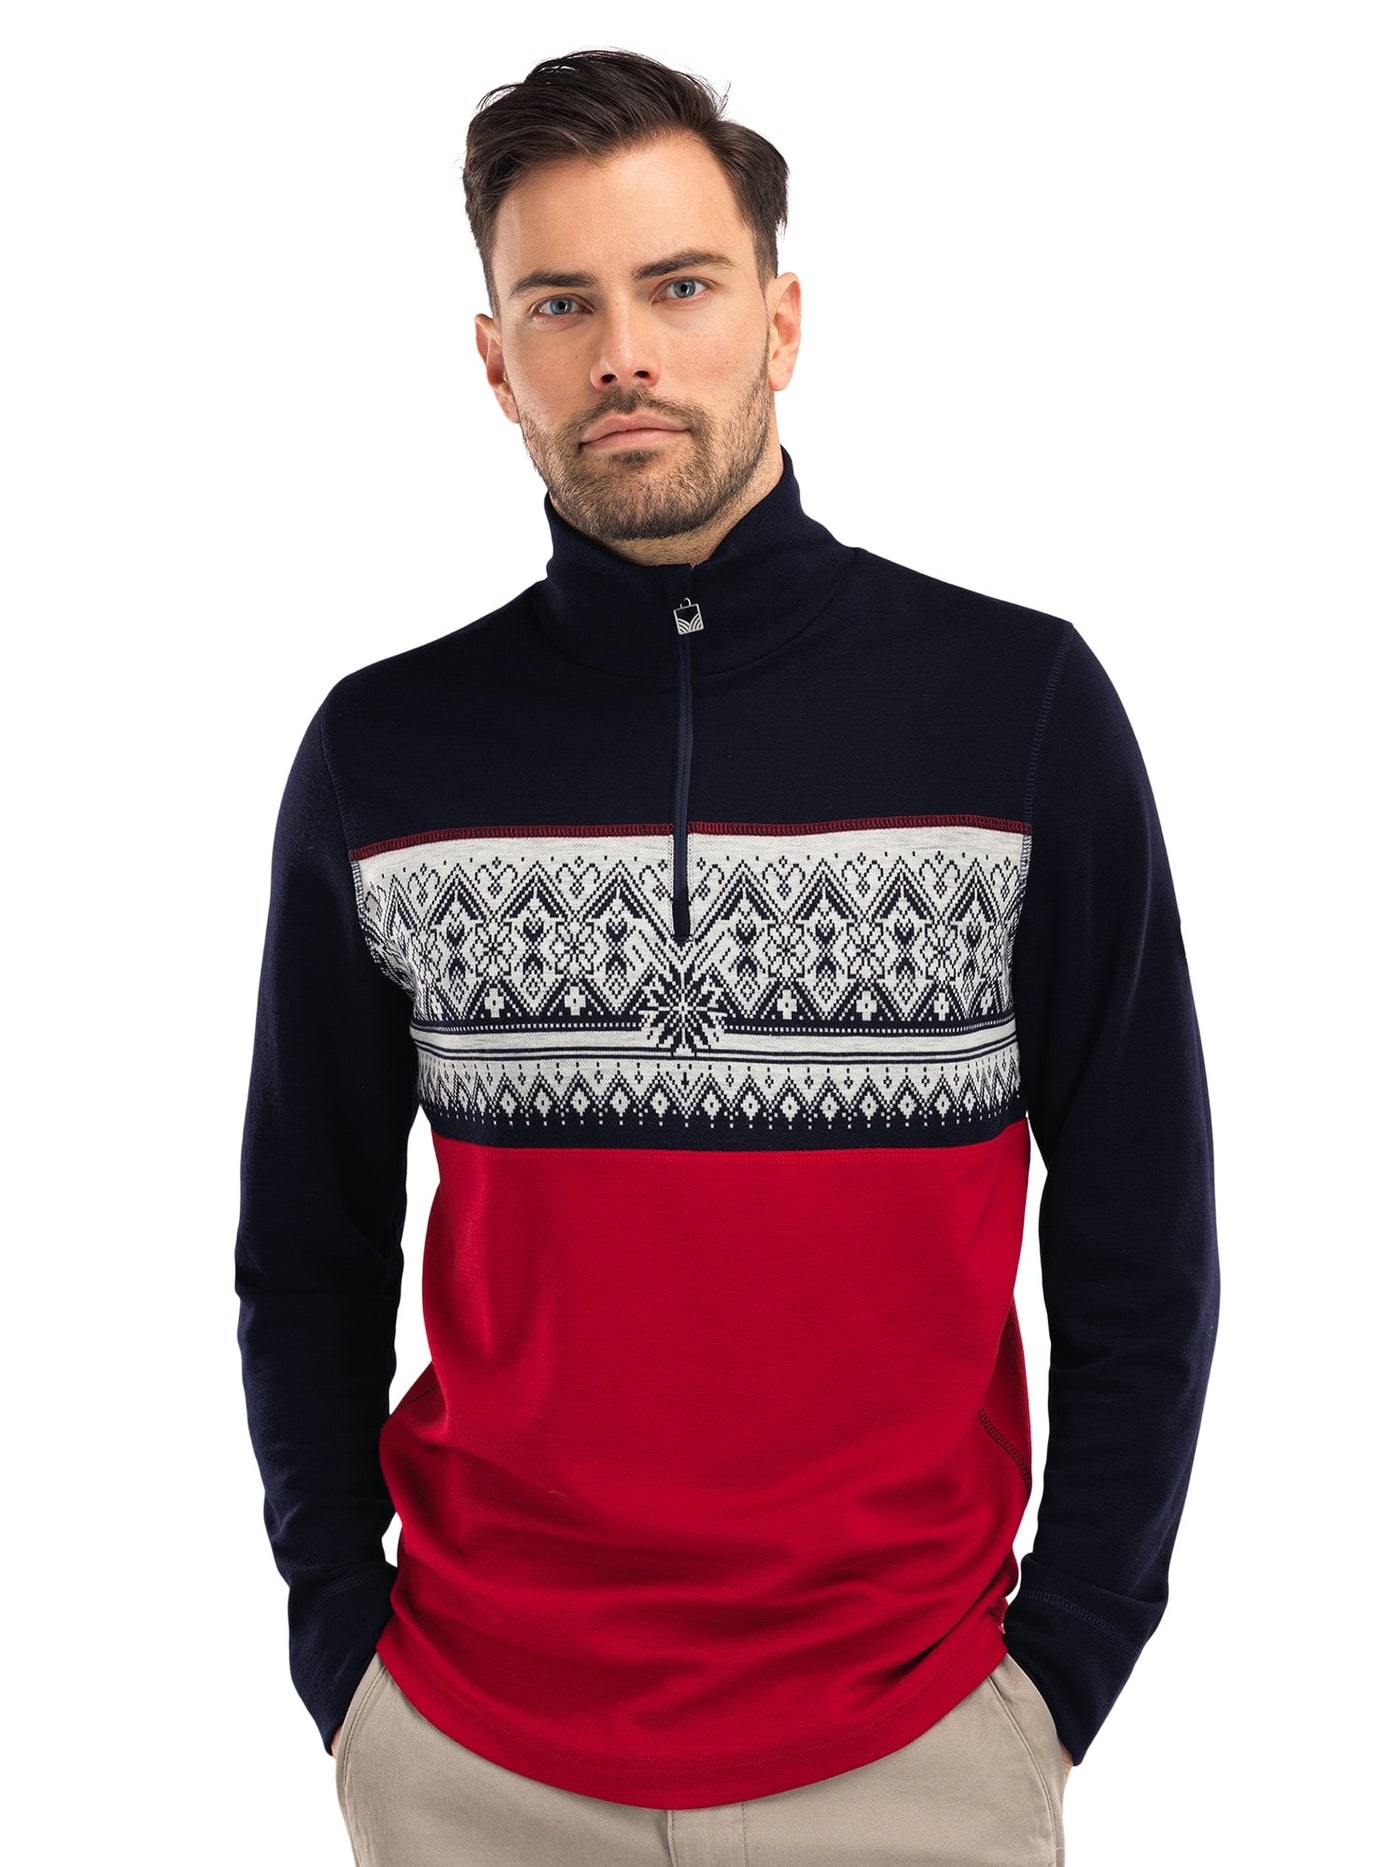 St. Moritz basic masculine sweater